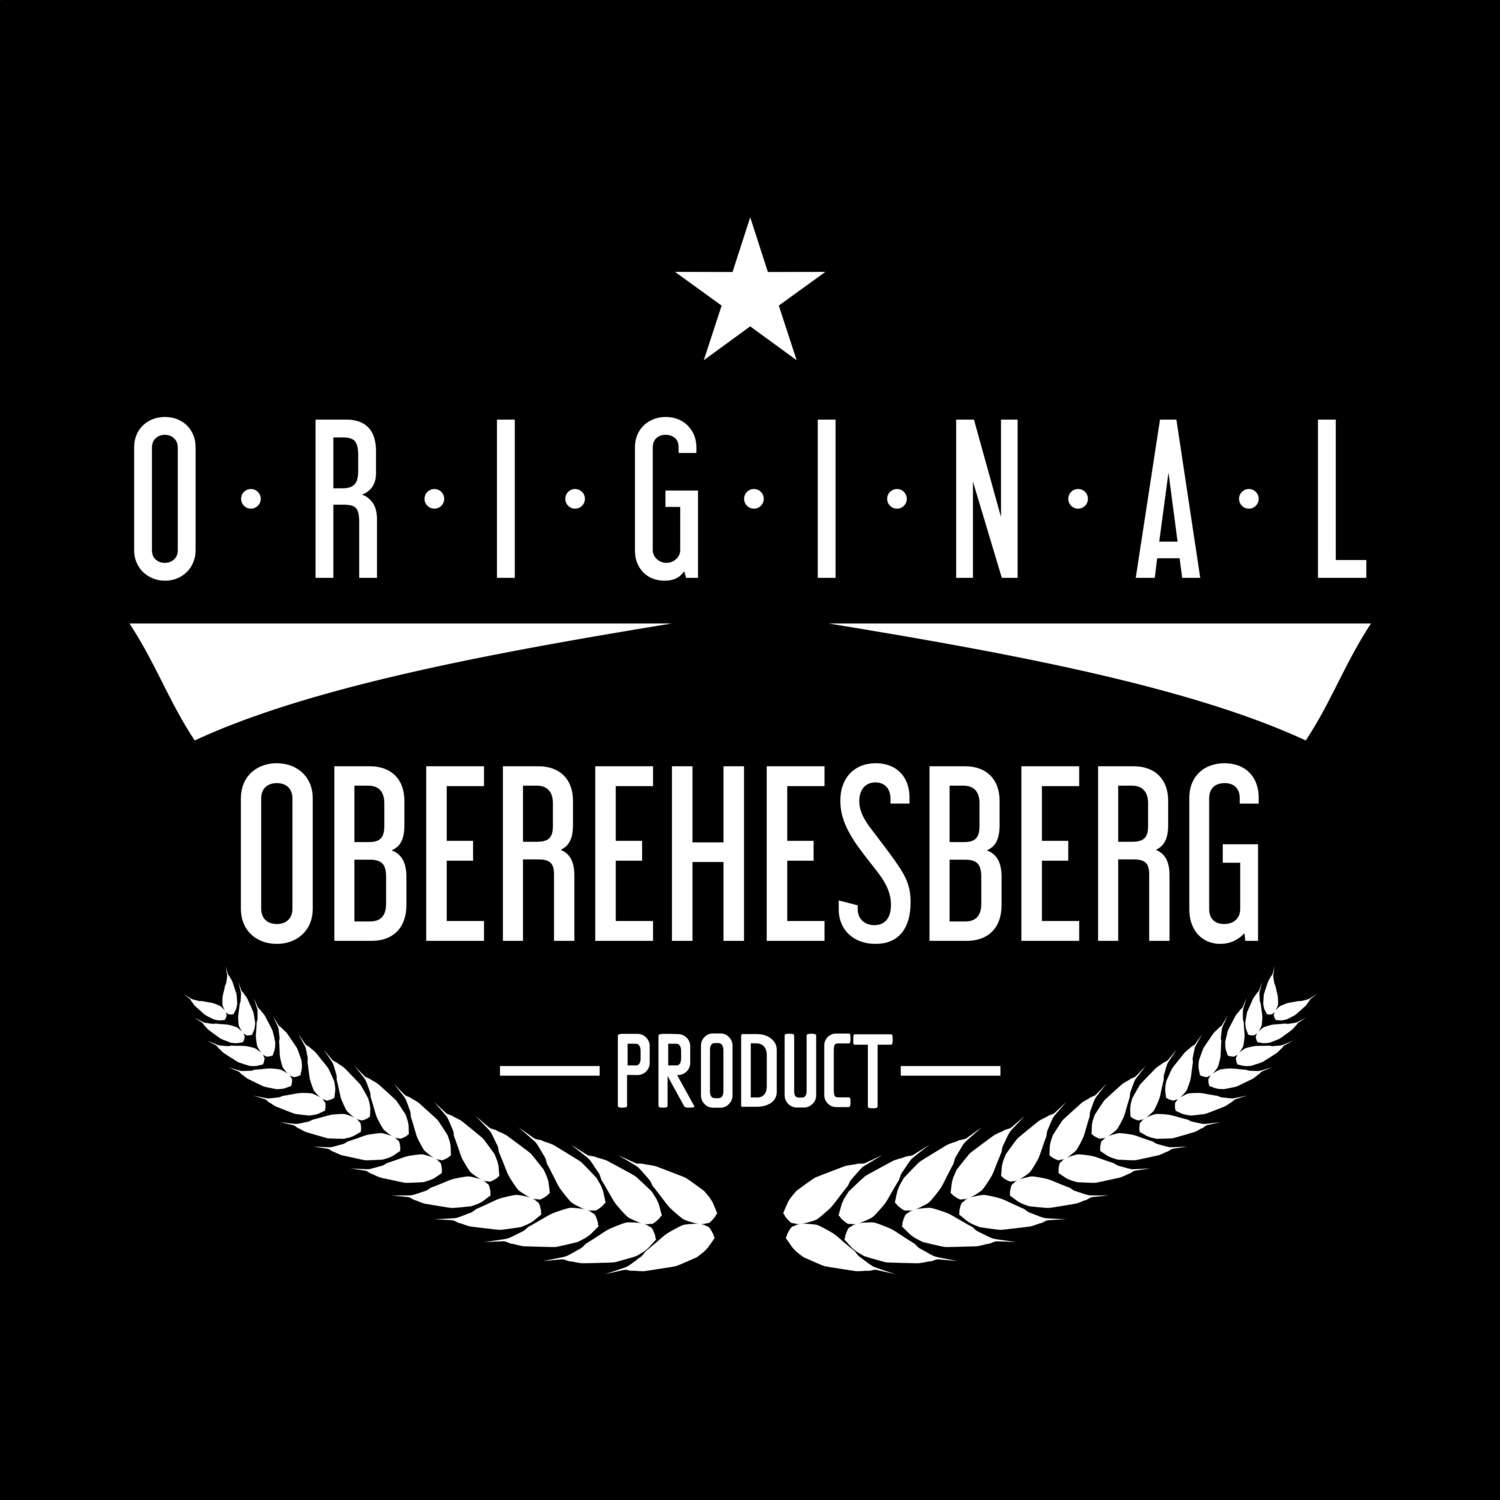 Oberehesberg T-Shirt »Original Product«